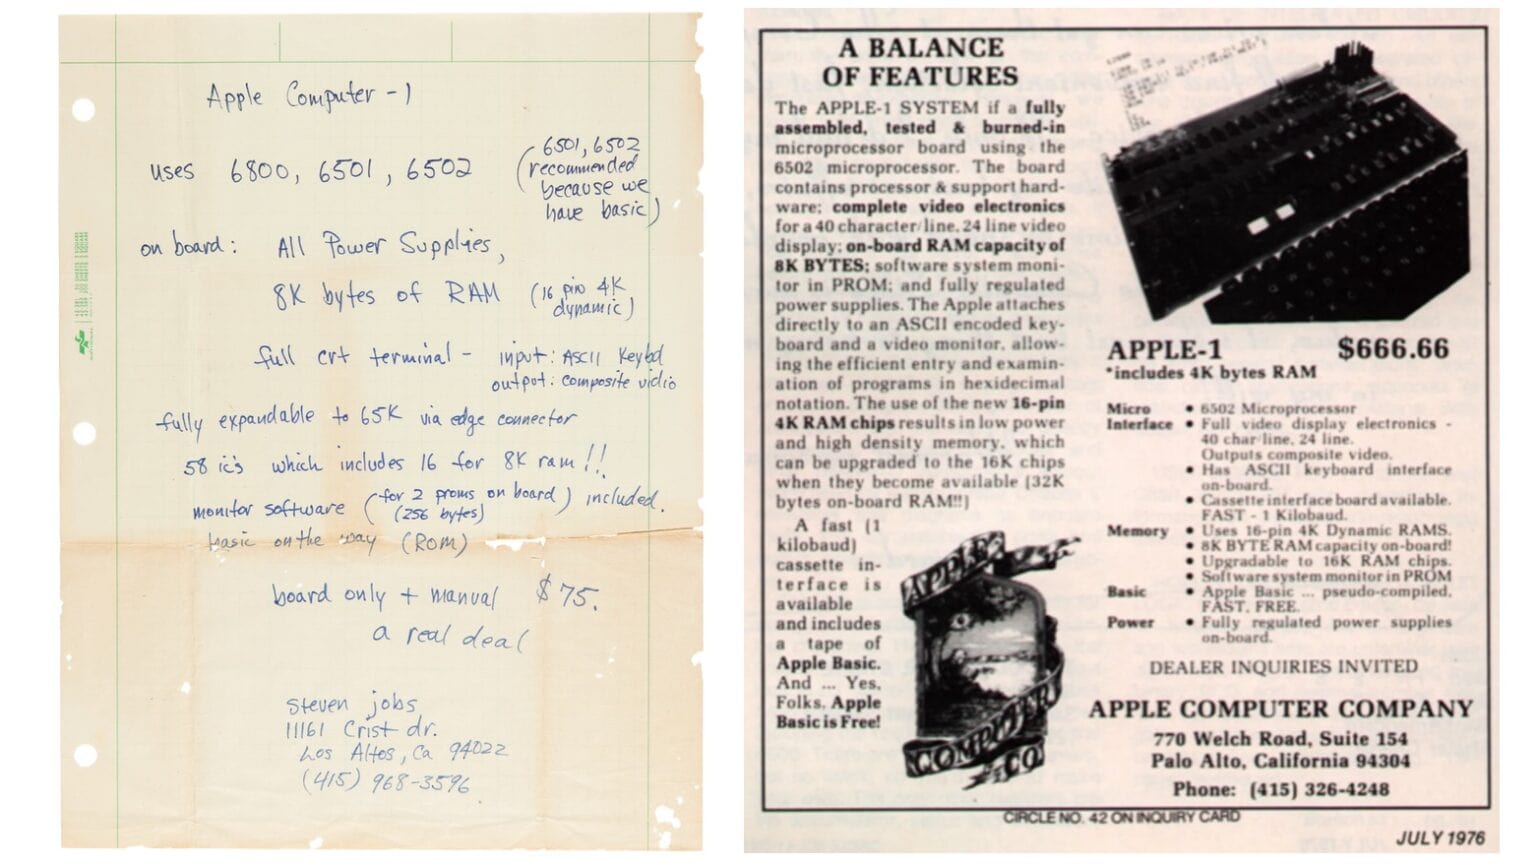 Apple-1 handwritten ad by Steve Jobs